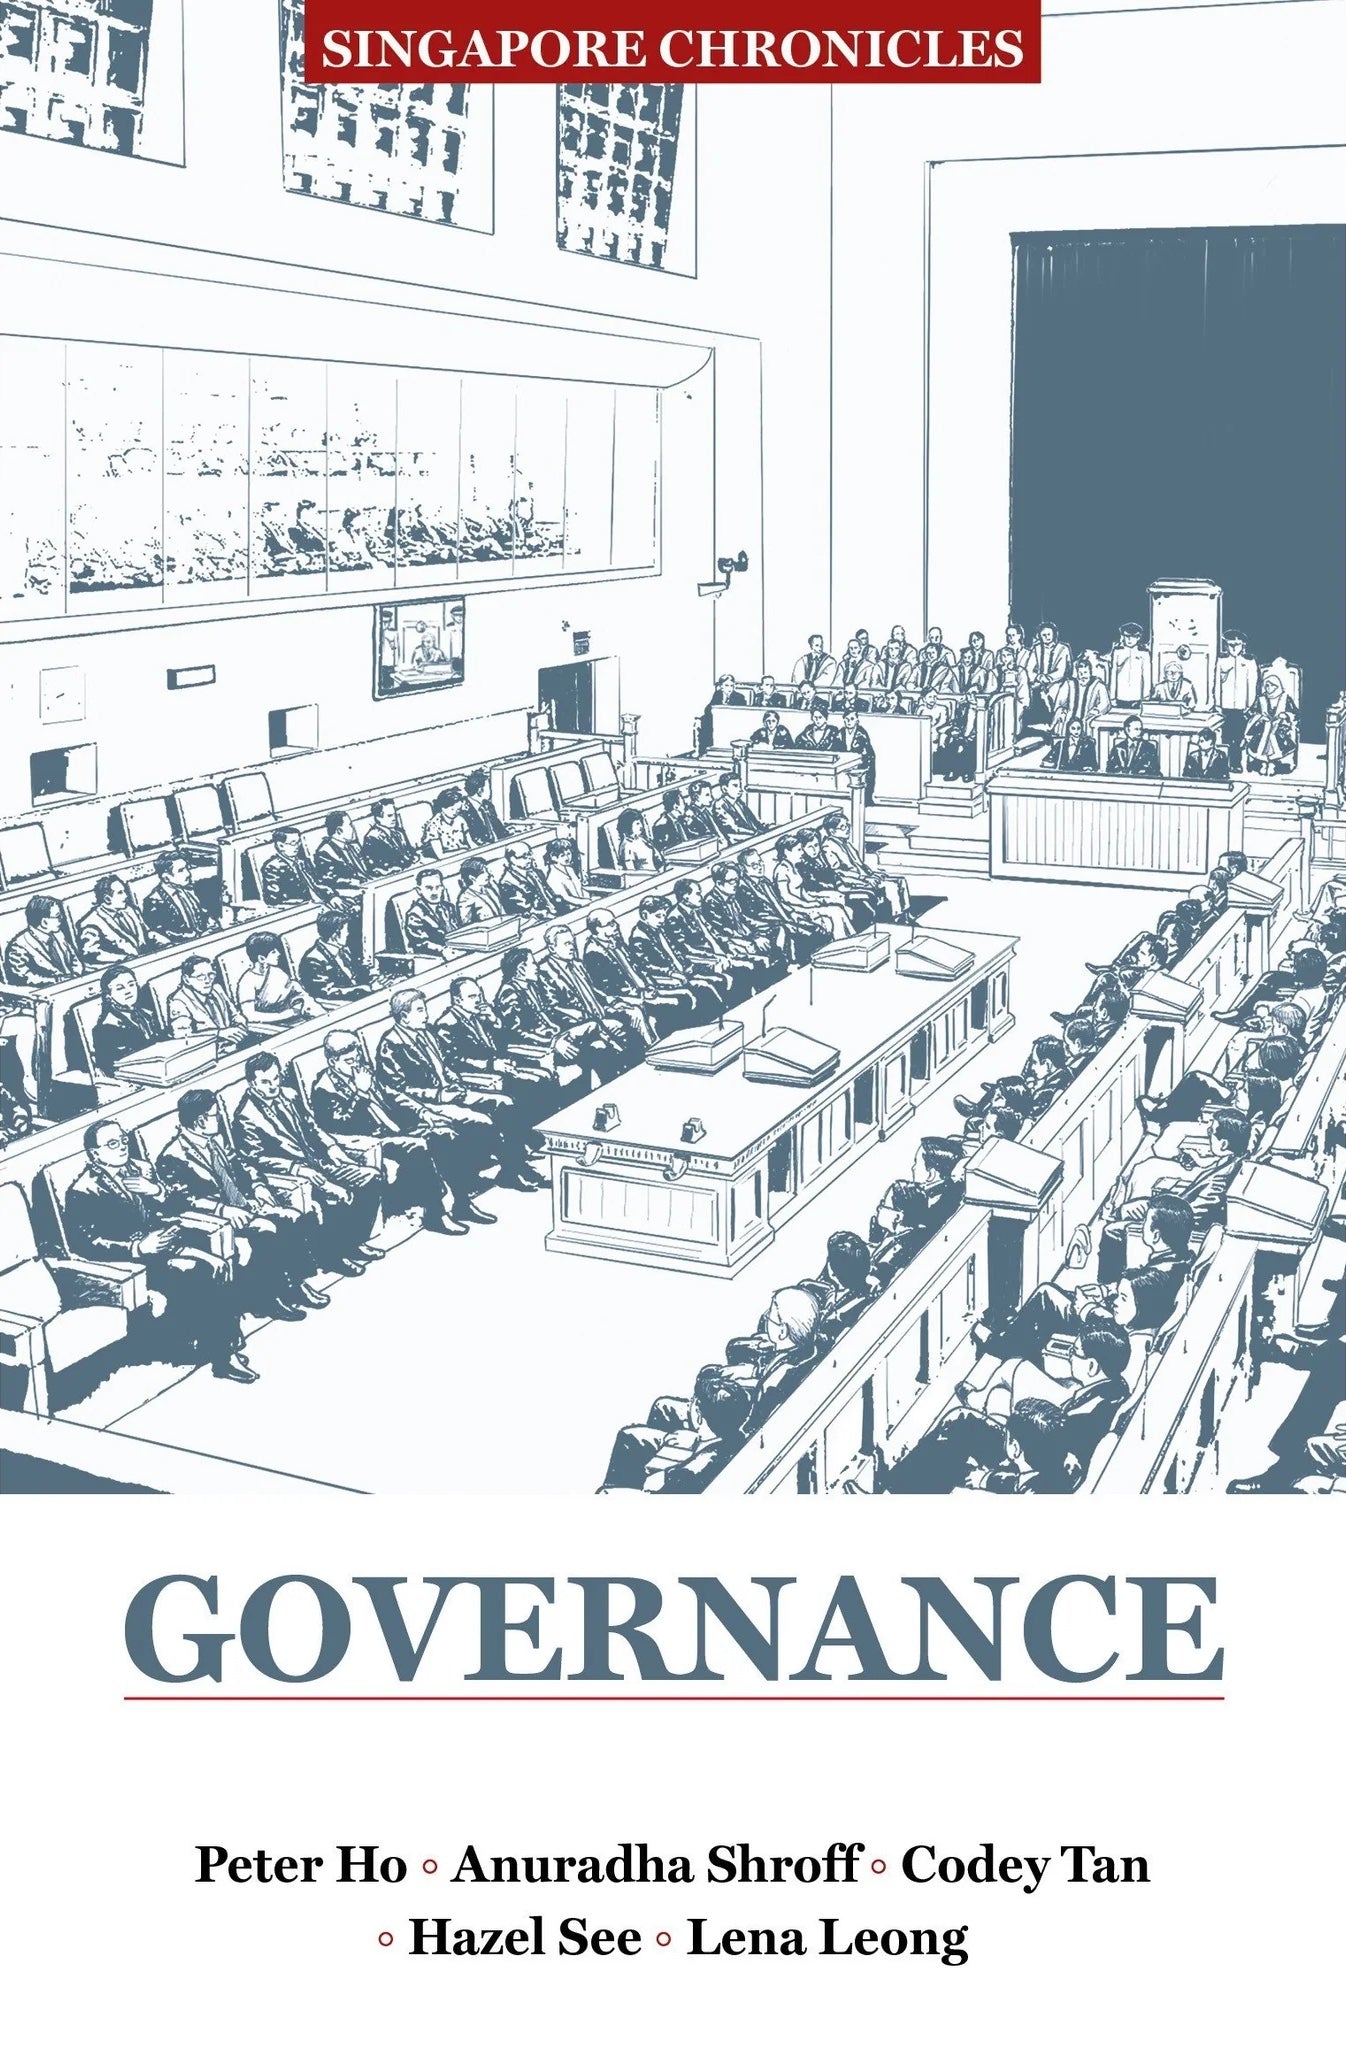 Singapore Chronicles: Governance